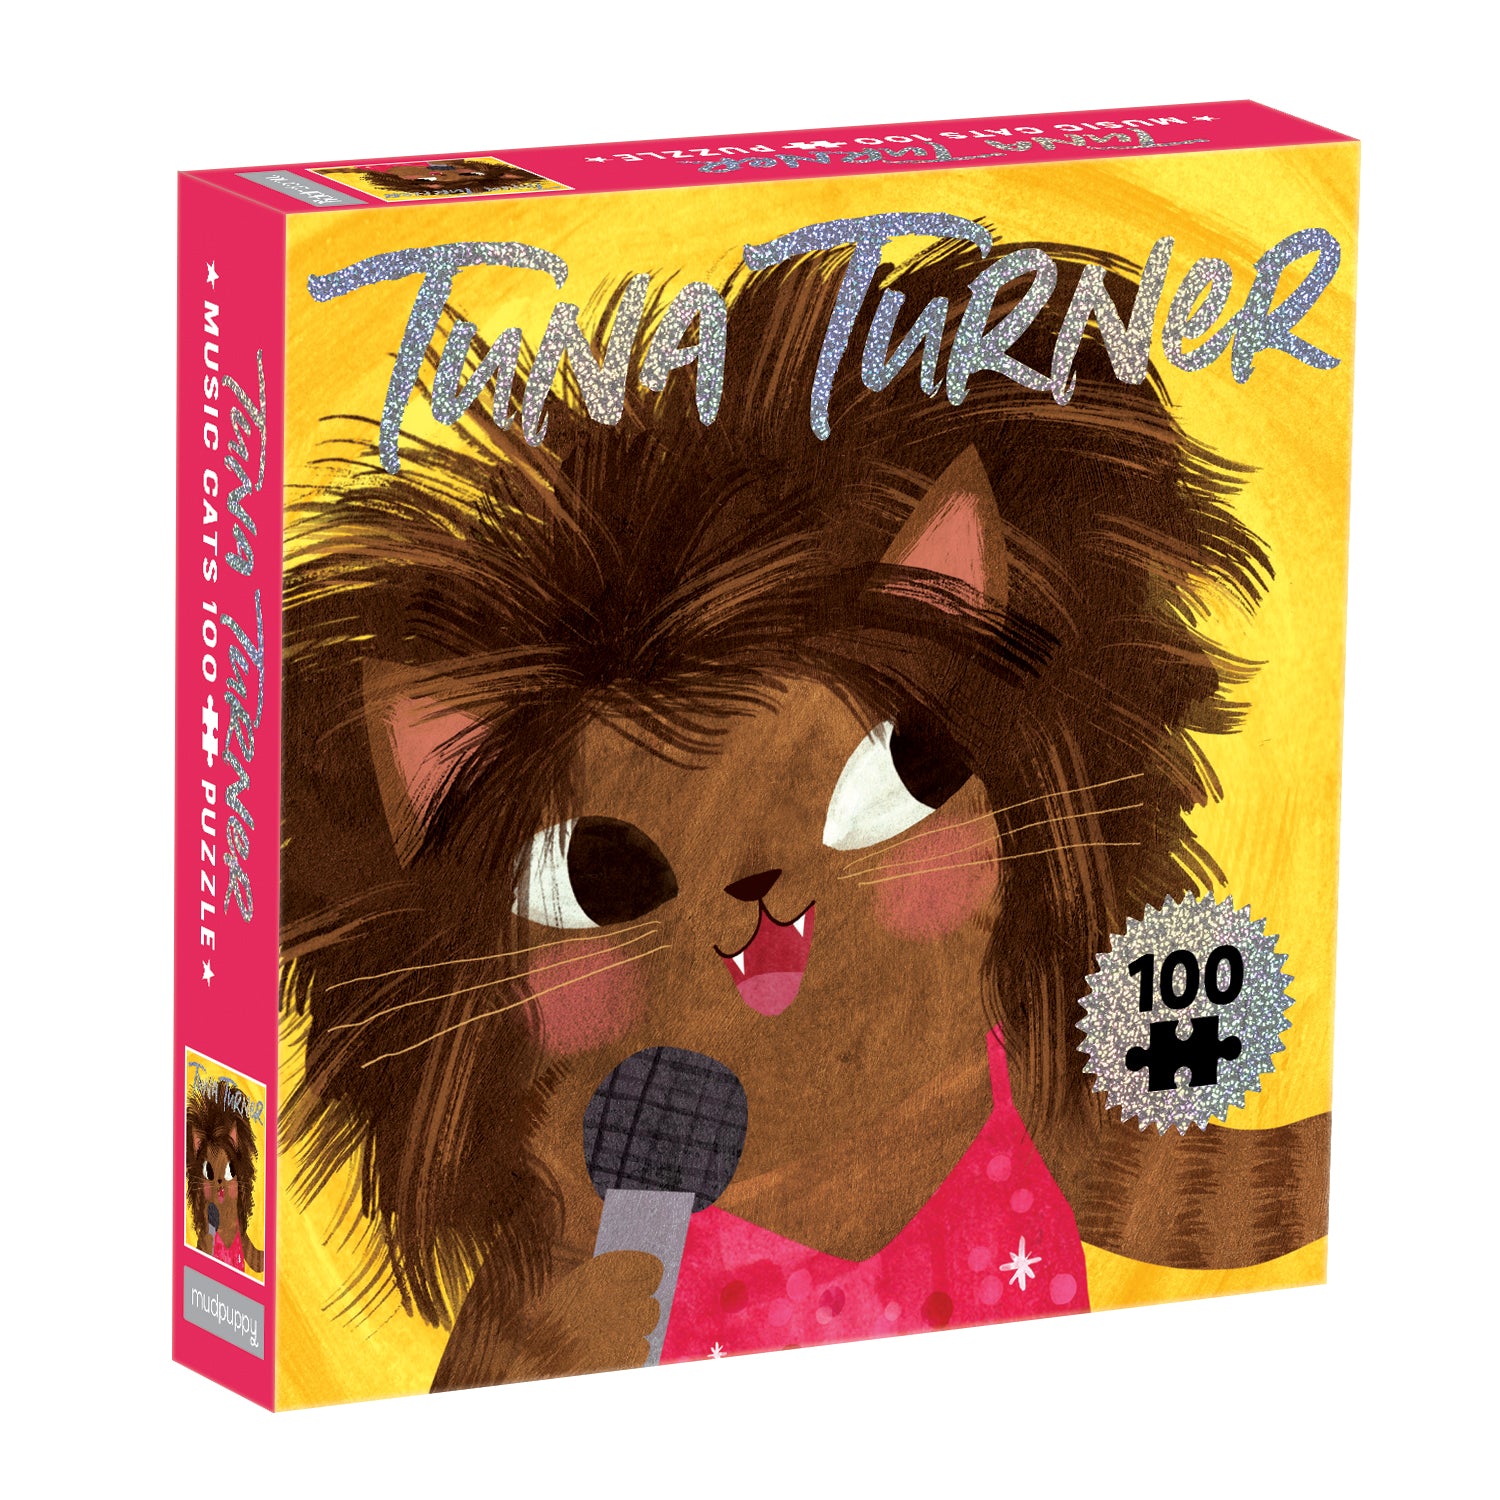 Tina Turner/cat 100 piece jigsaw for children.